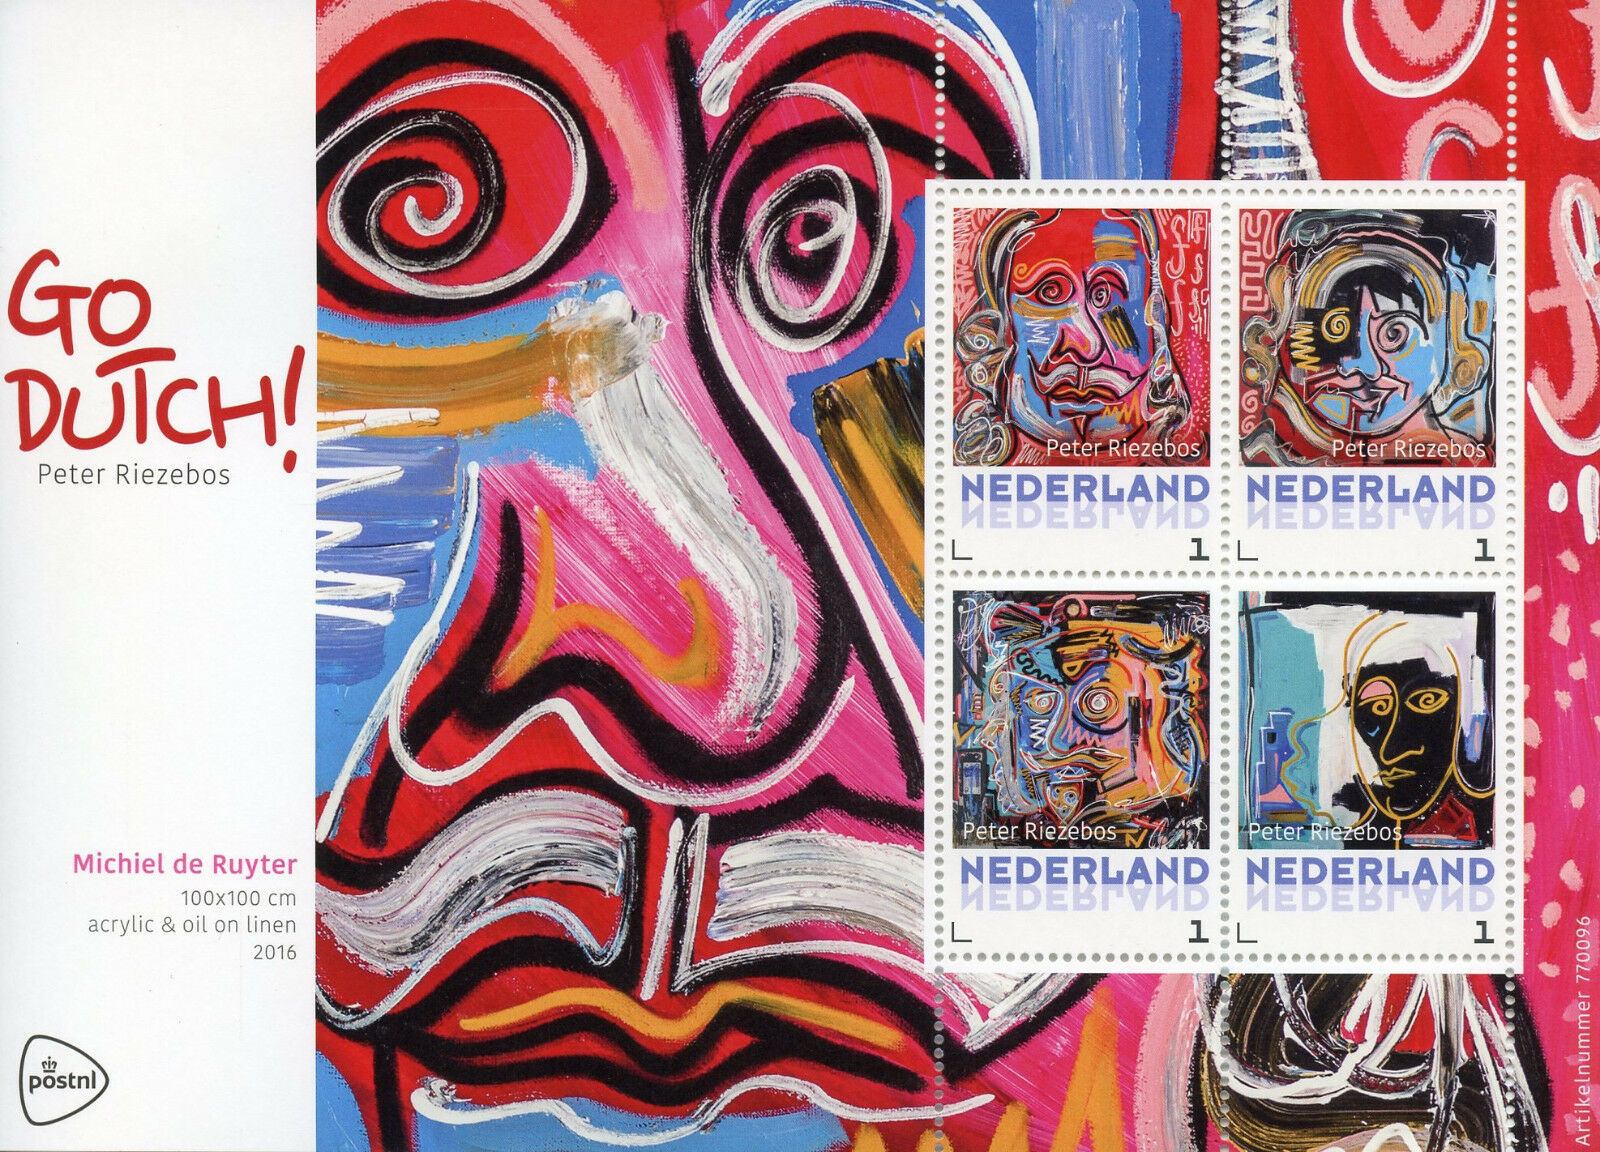 Netherlands 2017 MNH Michiel de Ruyter Go Dutch Peter Riezebos 4v M/S Art Stamps